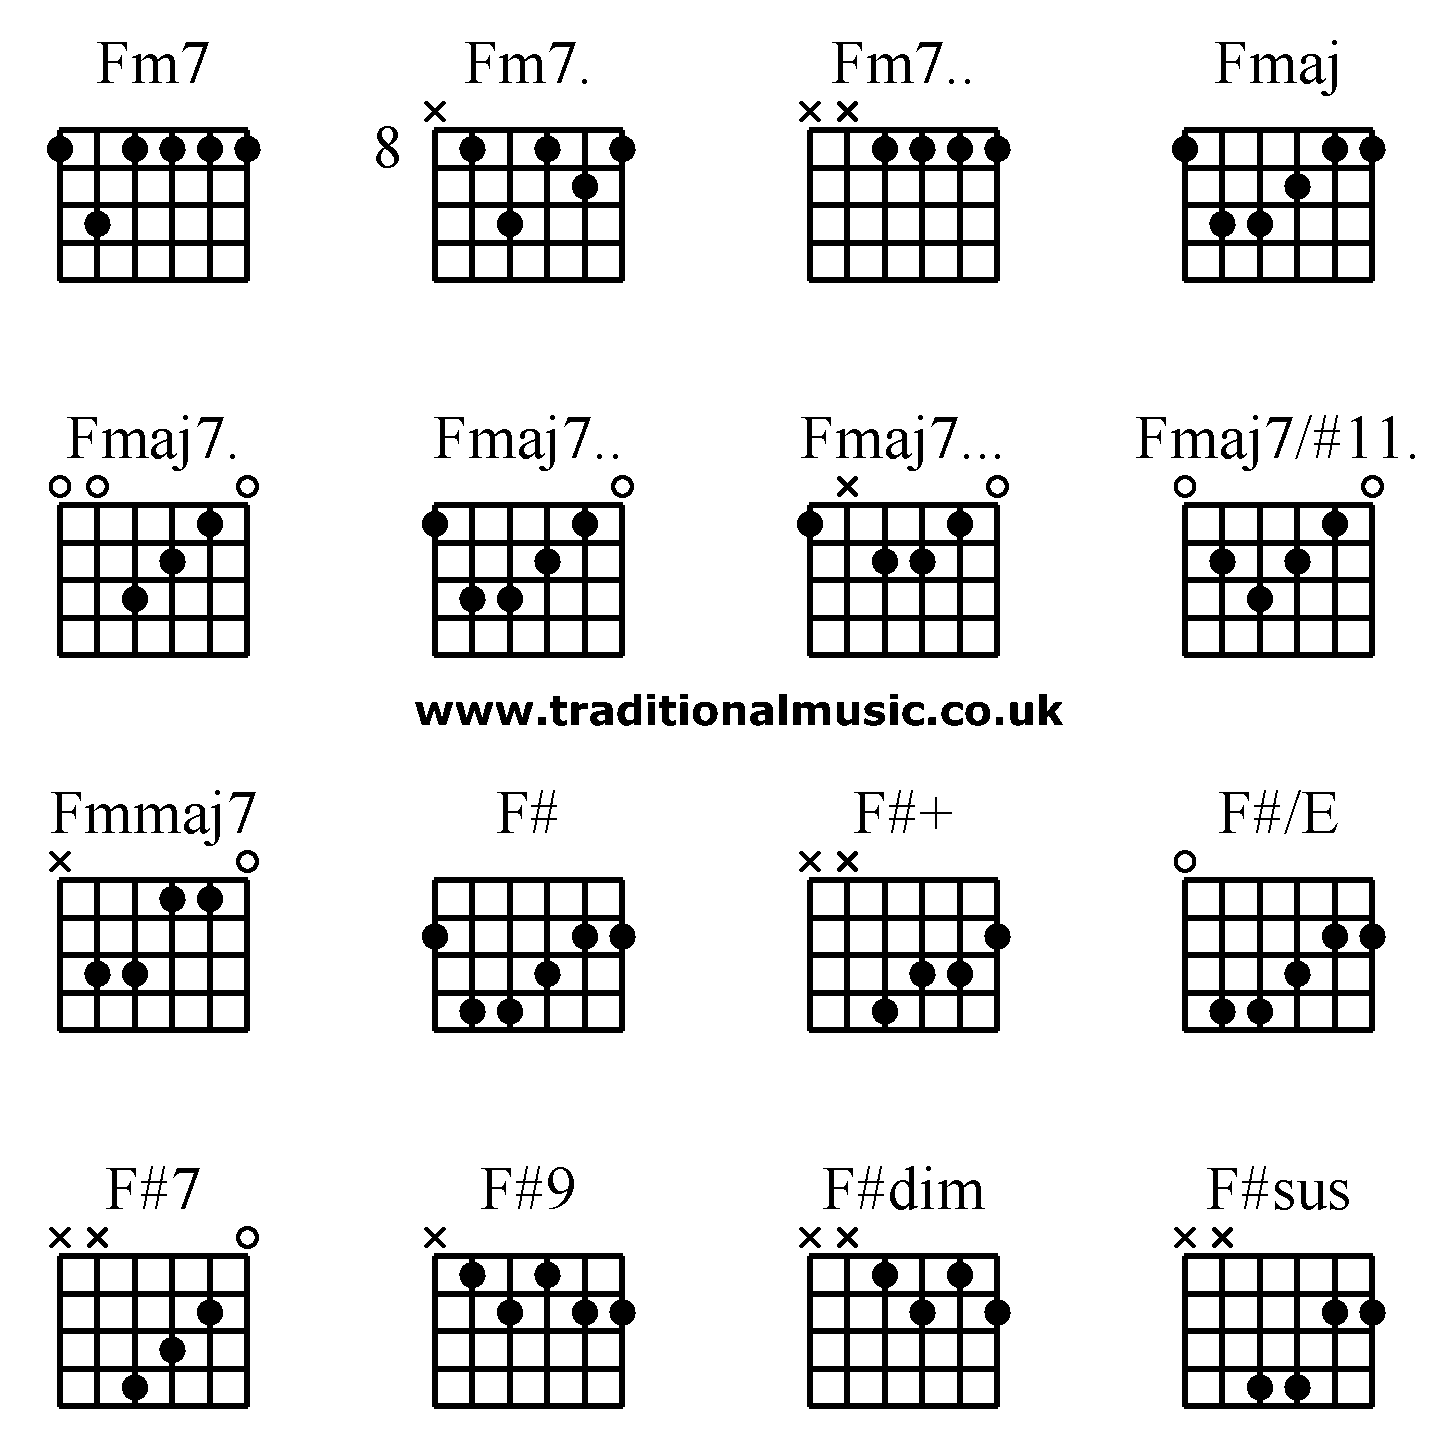 Advanced guitar chords:Fm7 Fm7. Fm7.. Fmaj Fmaj7. Fmaj7.. Fmaj7... Fmaj7/#11. Fmmaj7 F# F#+ F#/E F#7 F#9 F#dim F#sus